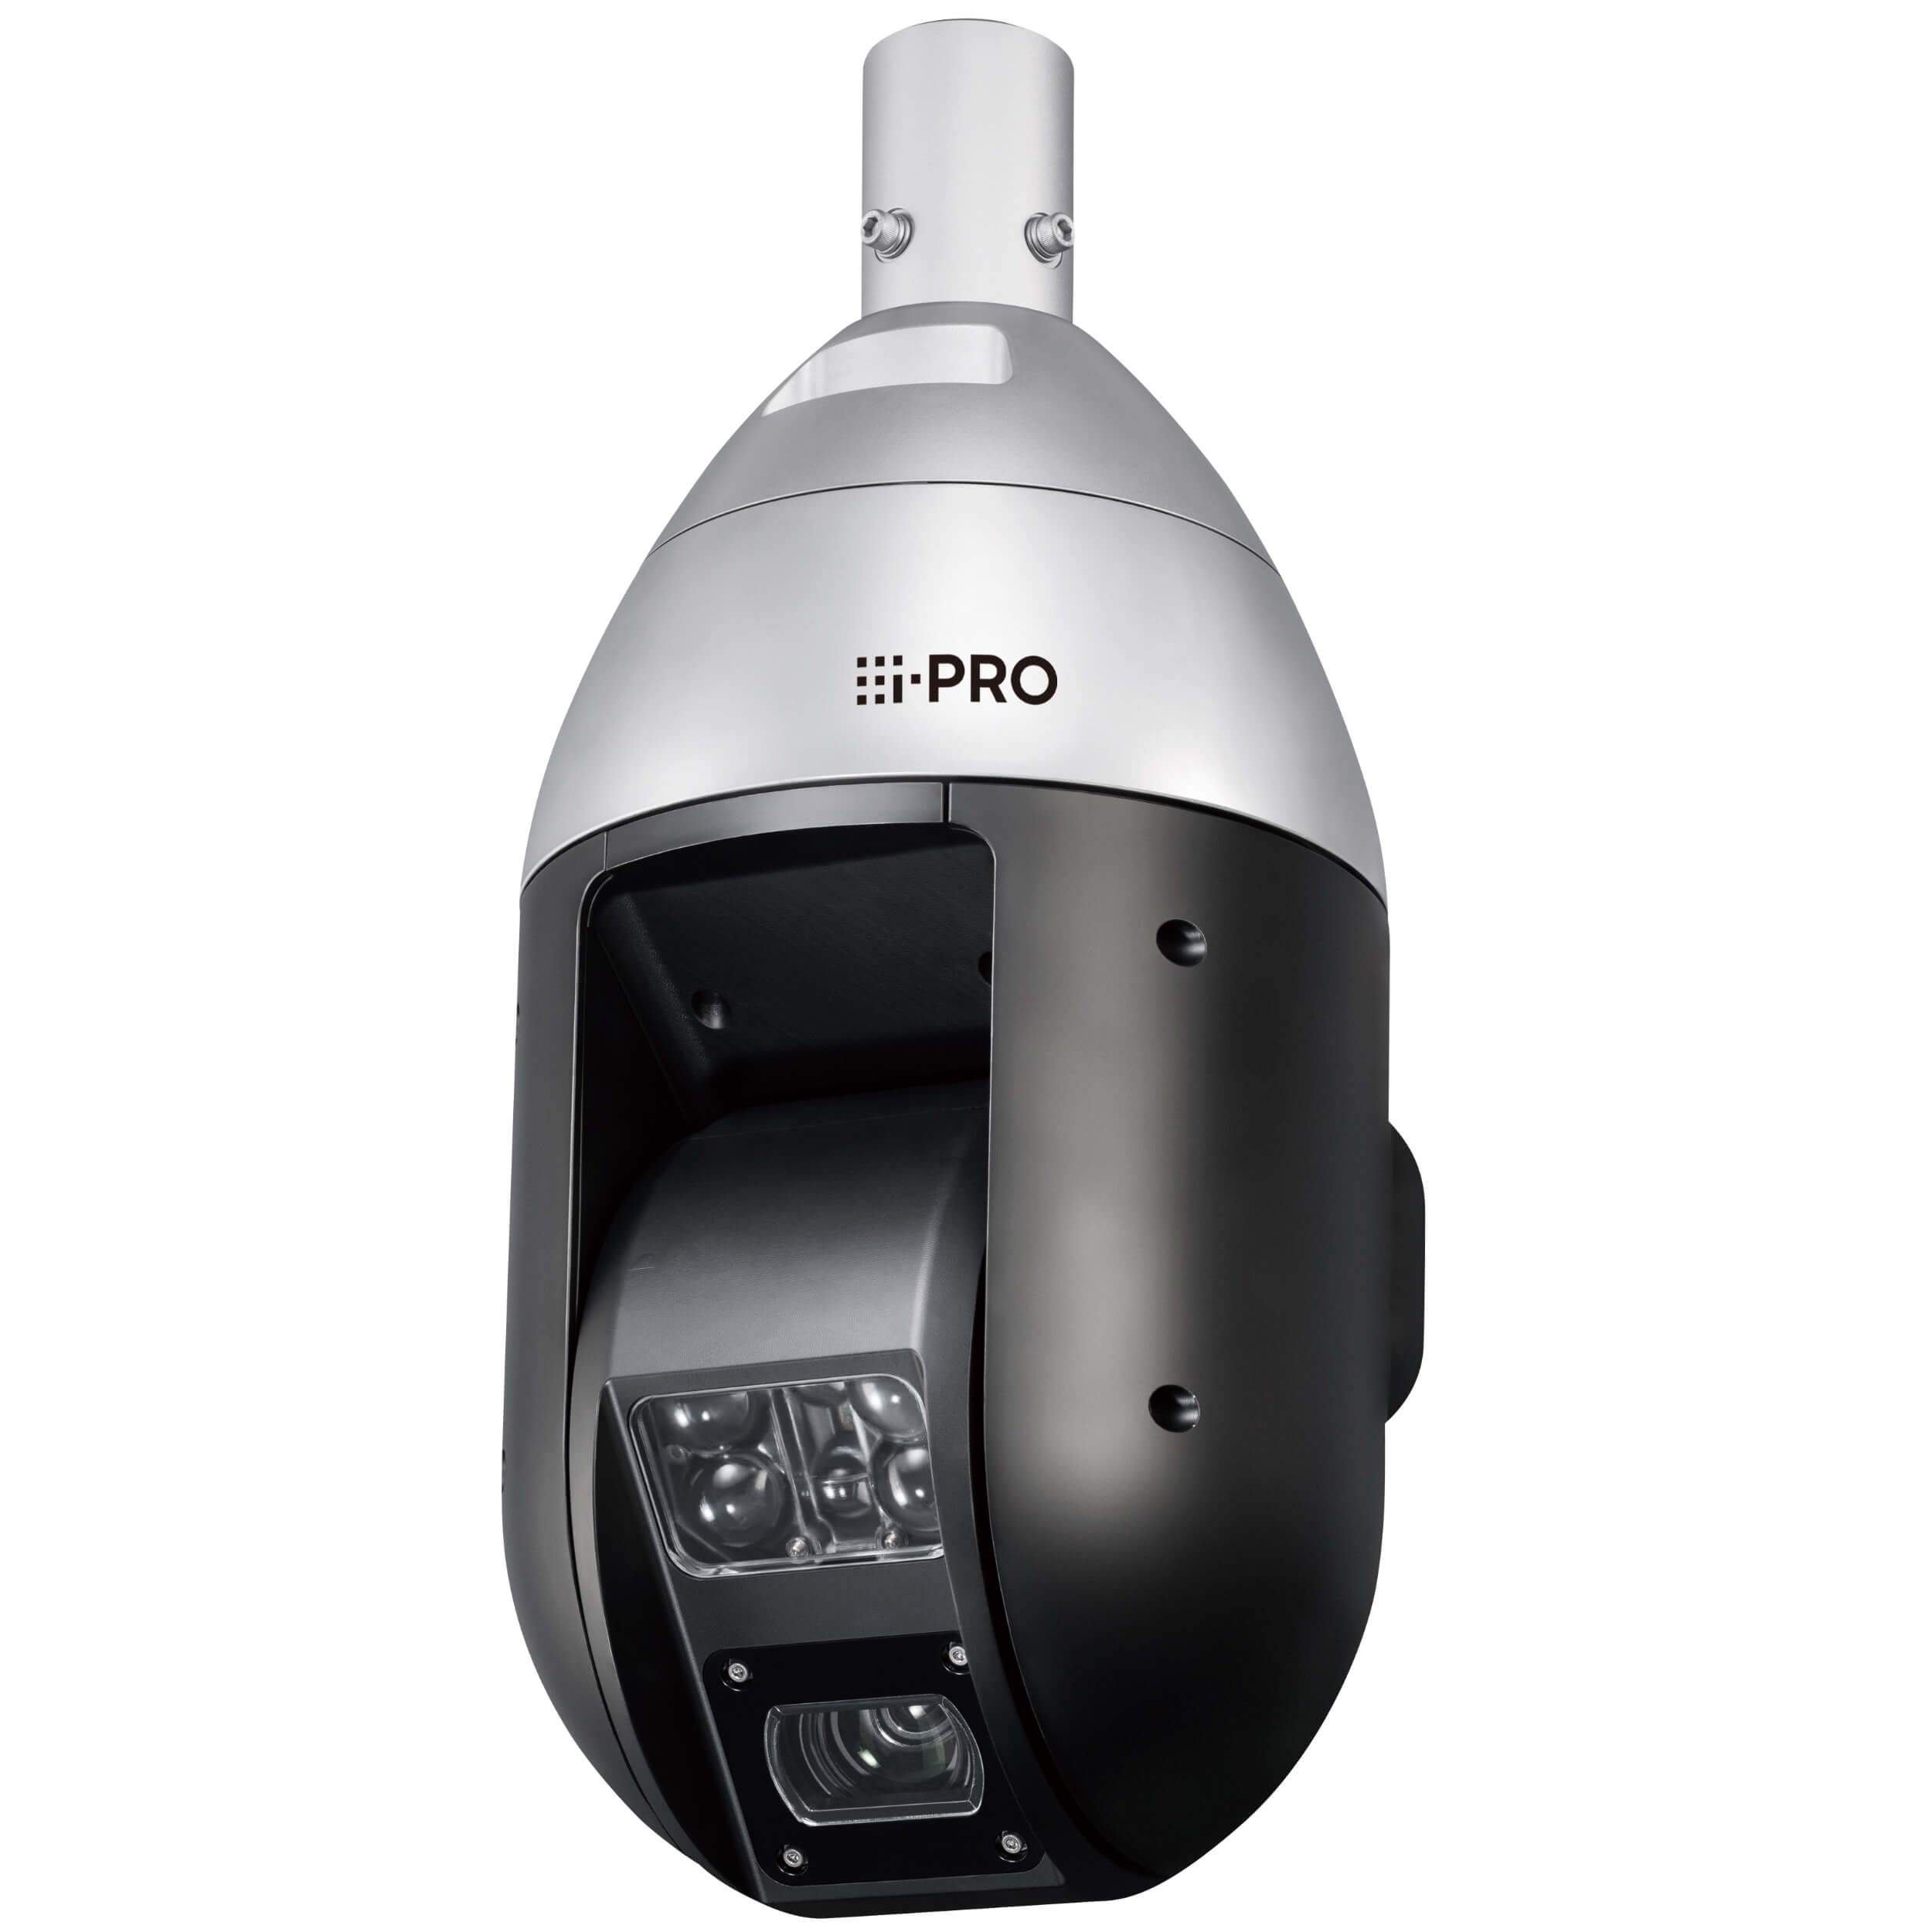 i-PRO WV-S6532LN features Panasonic Intelligent Auto (iA) technology